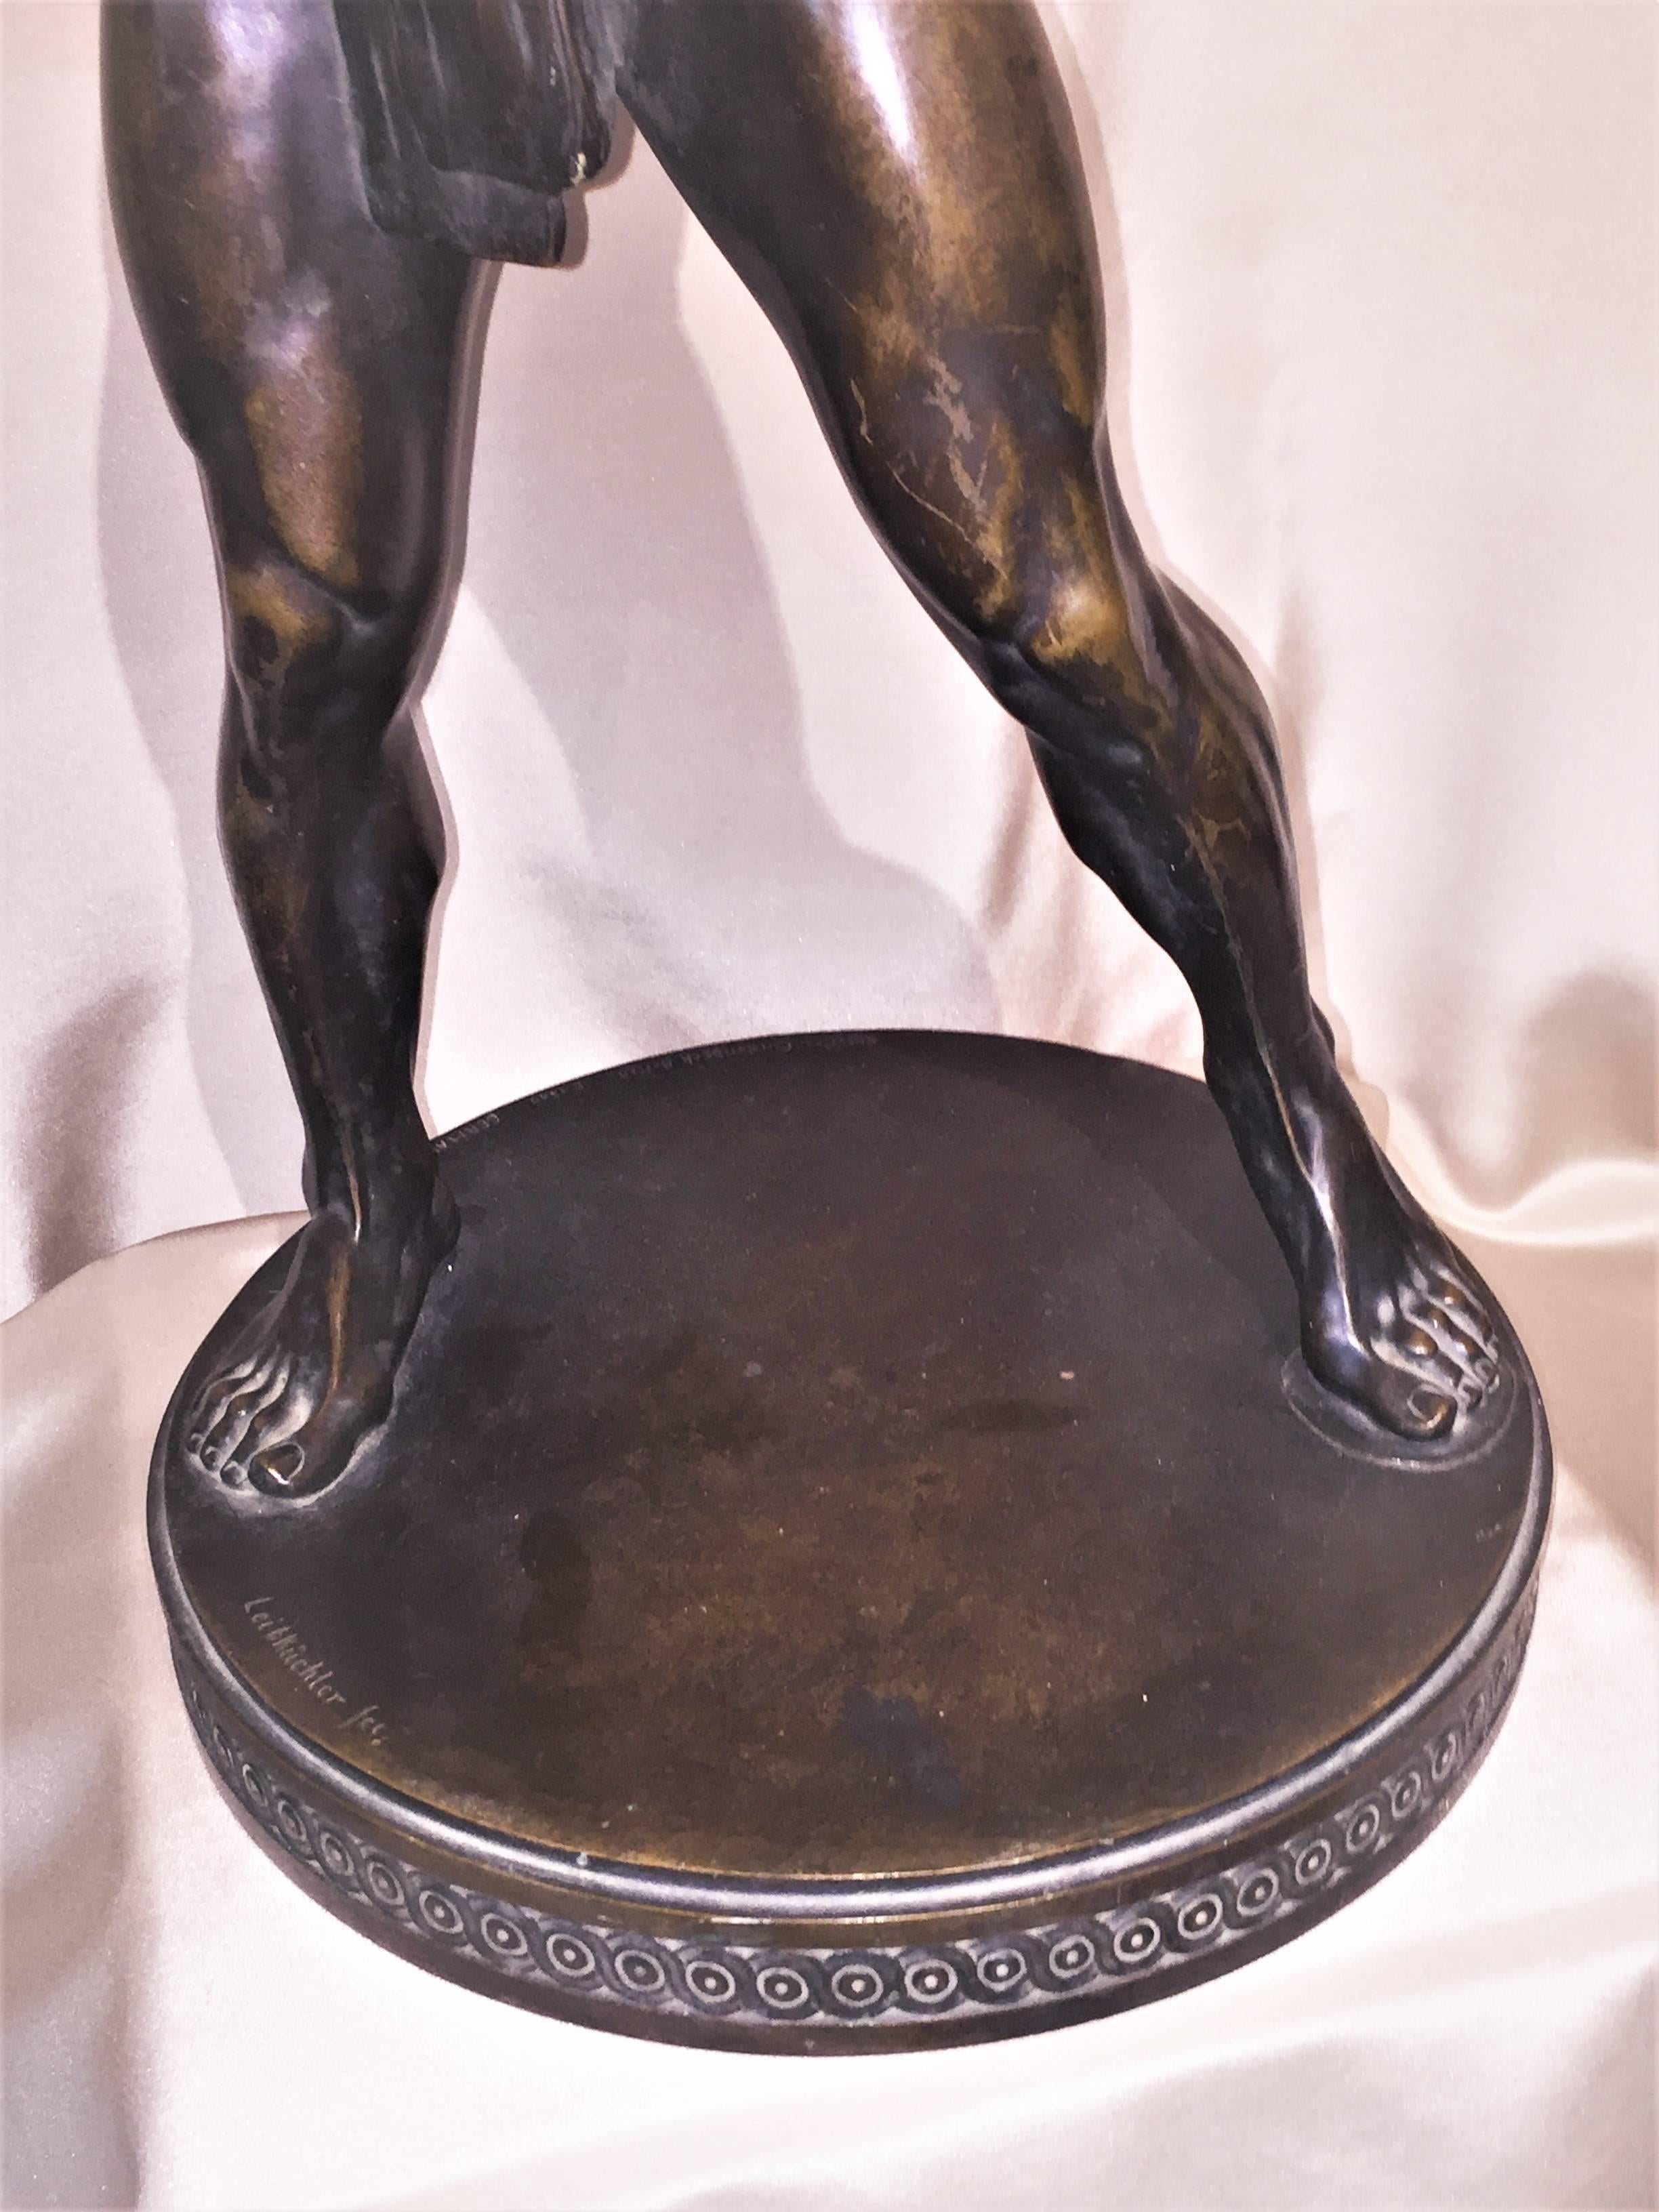 sisyphus sculpture for sale